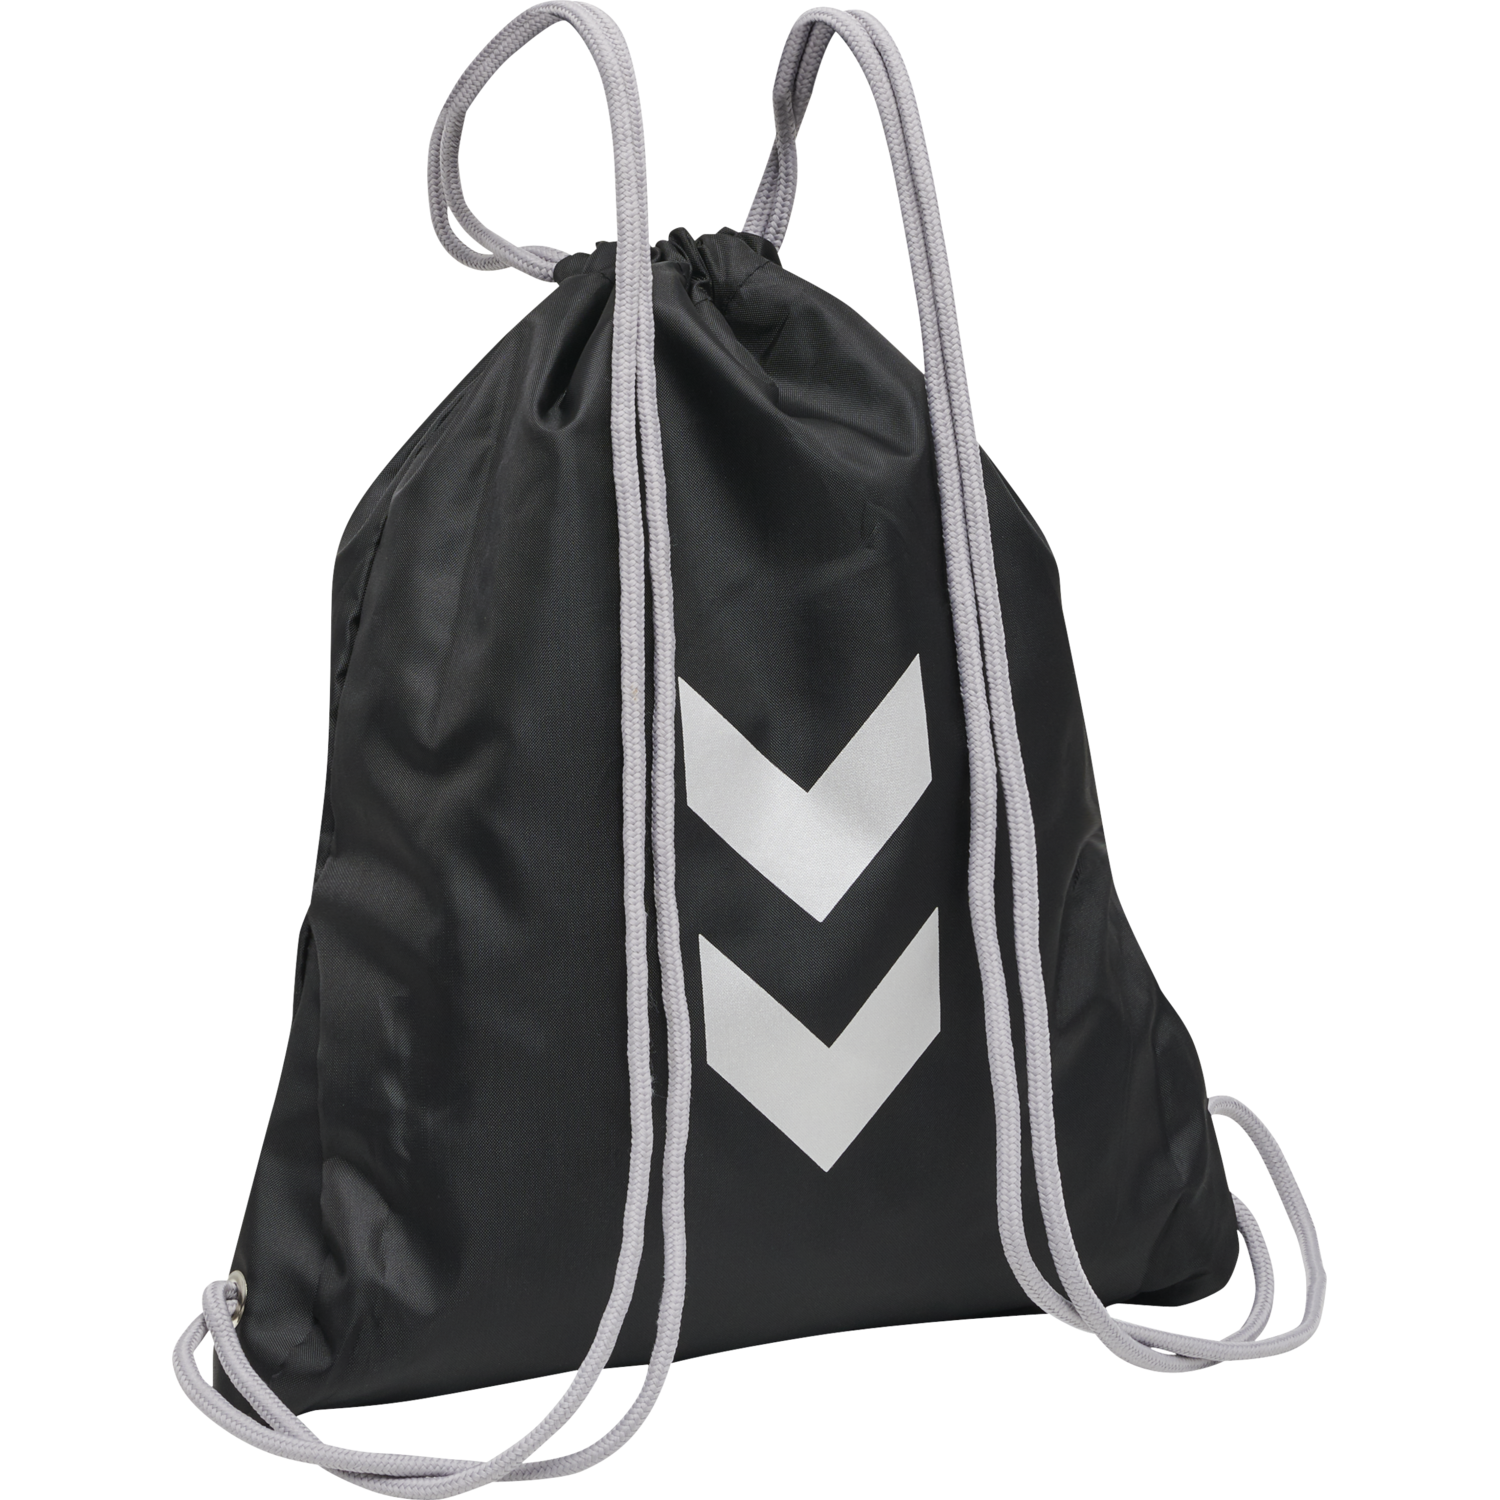 Standard Size Black Hummel Unisex_Adult CORE Gym Gymnastics Bag